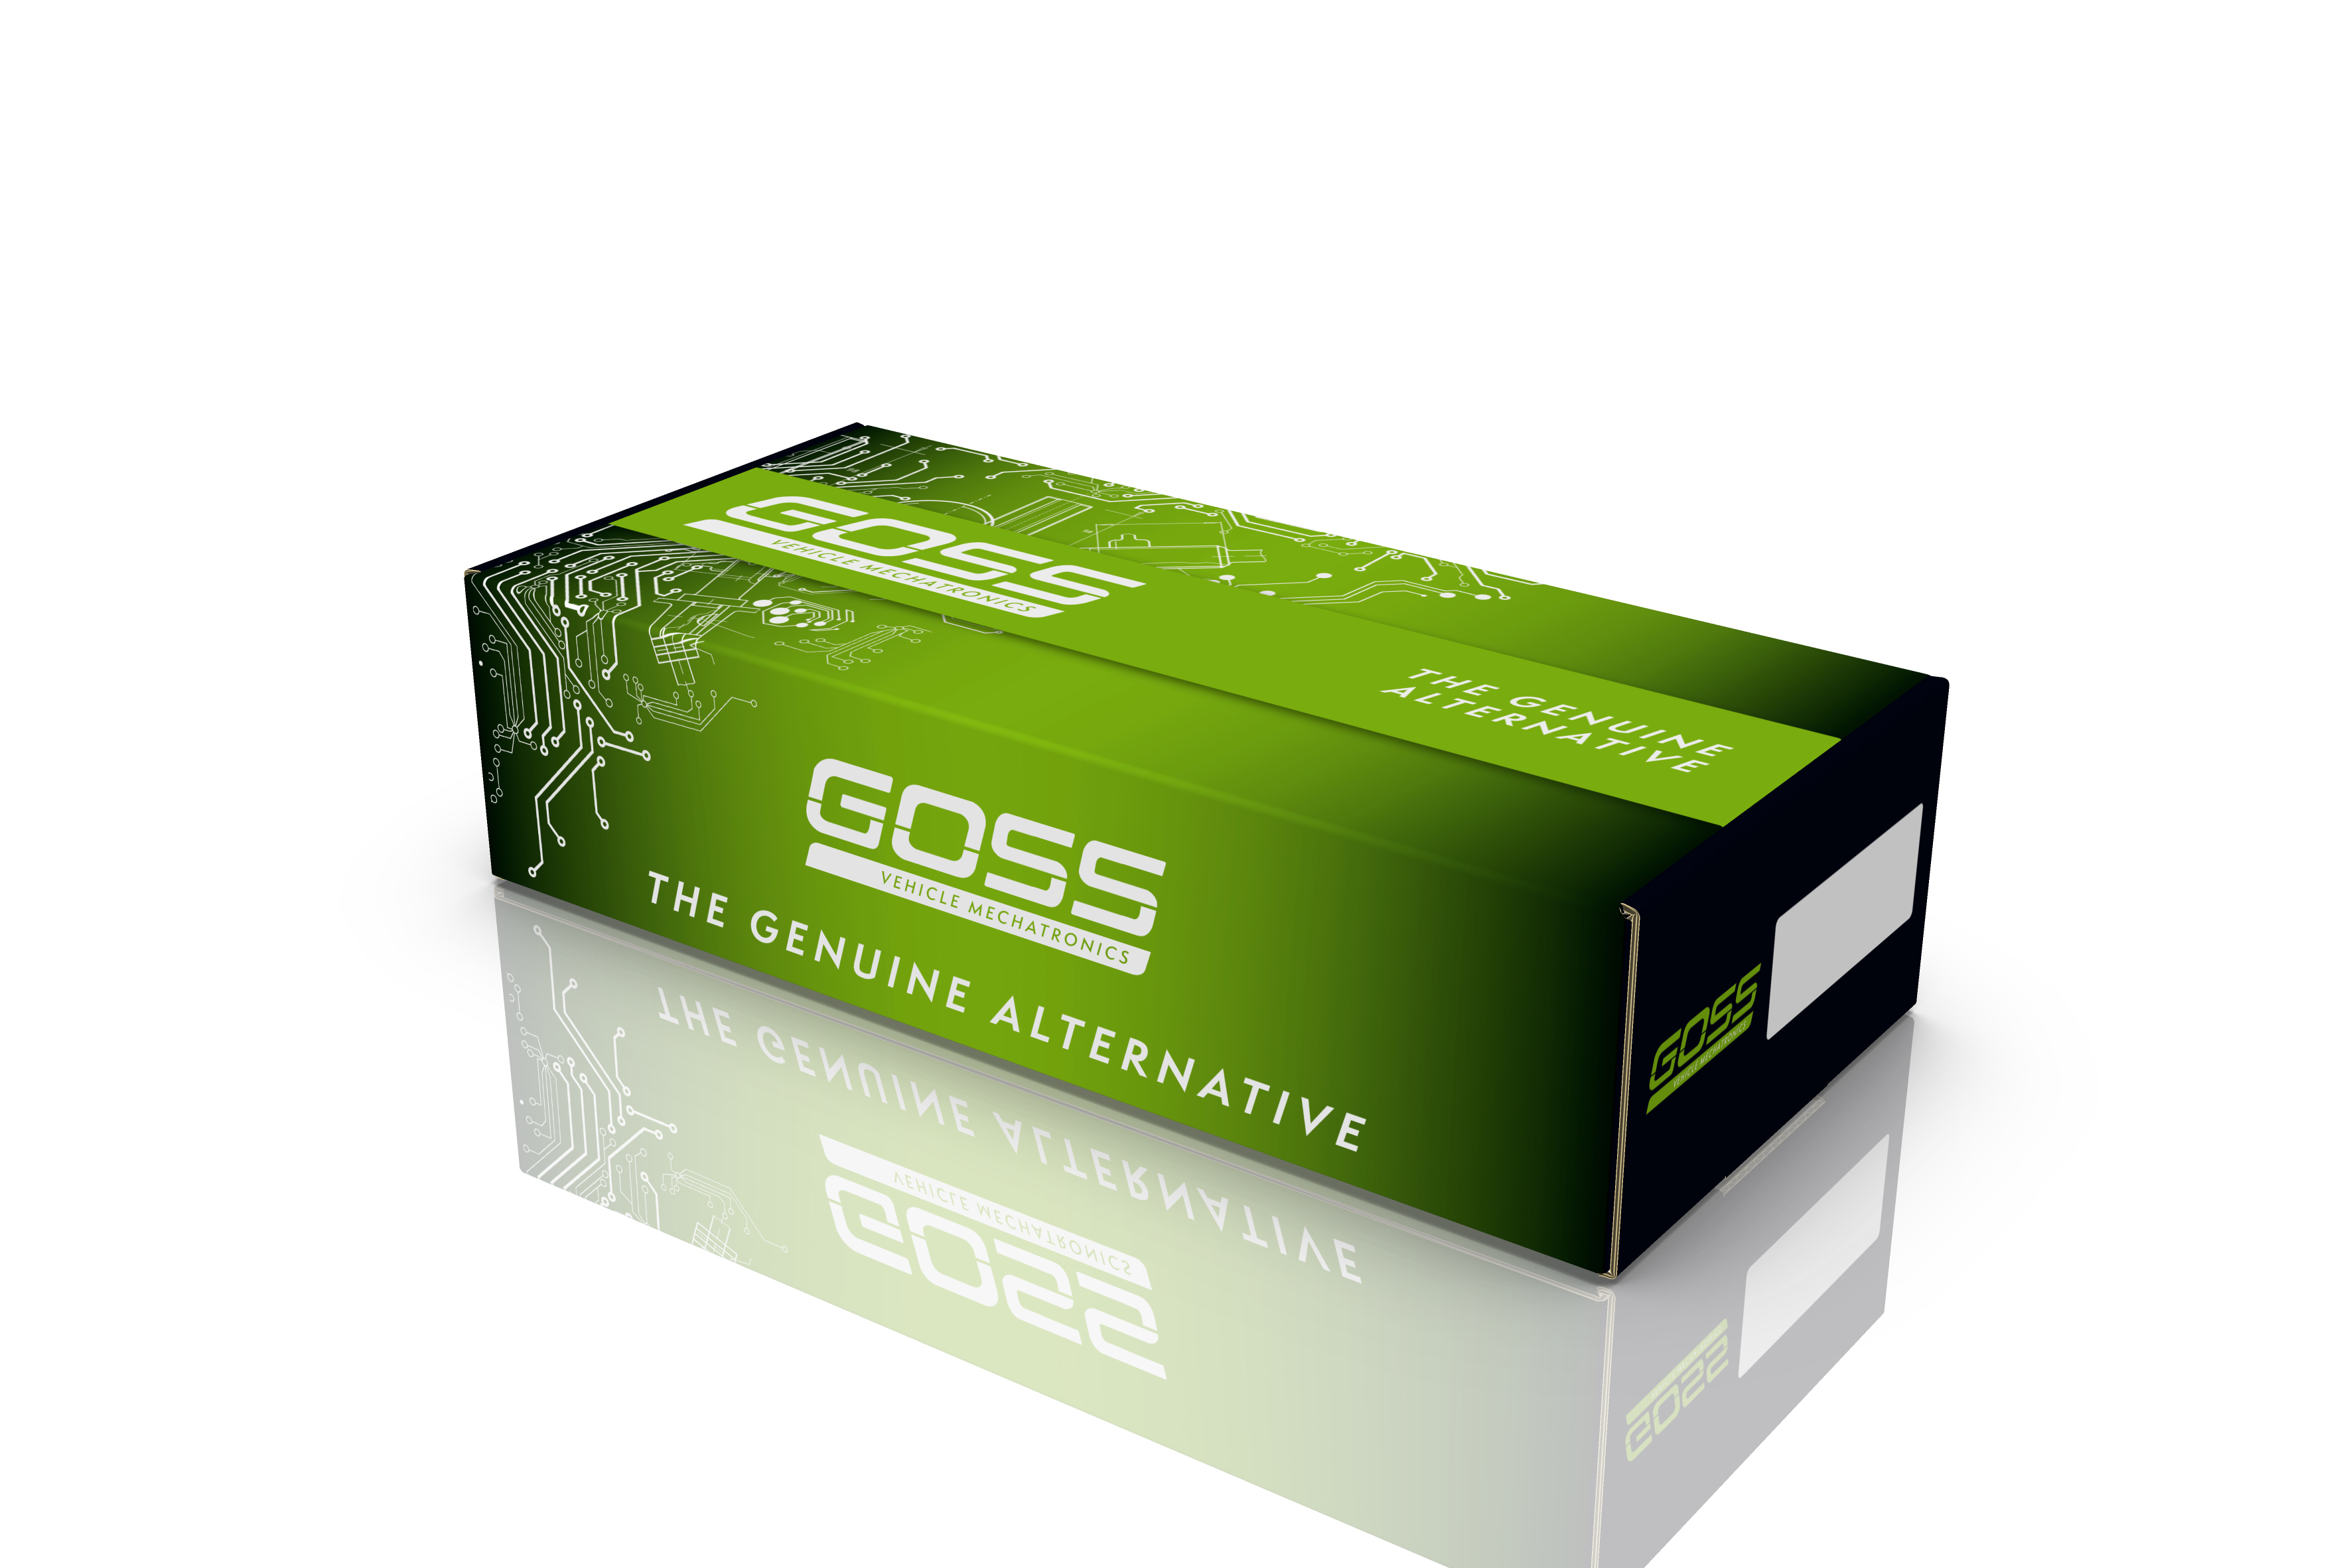 Goss – The Genuine Alternative